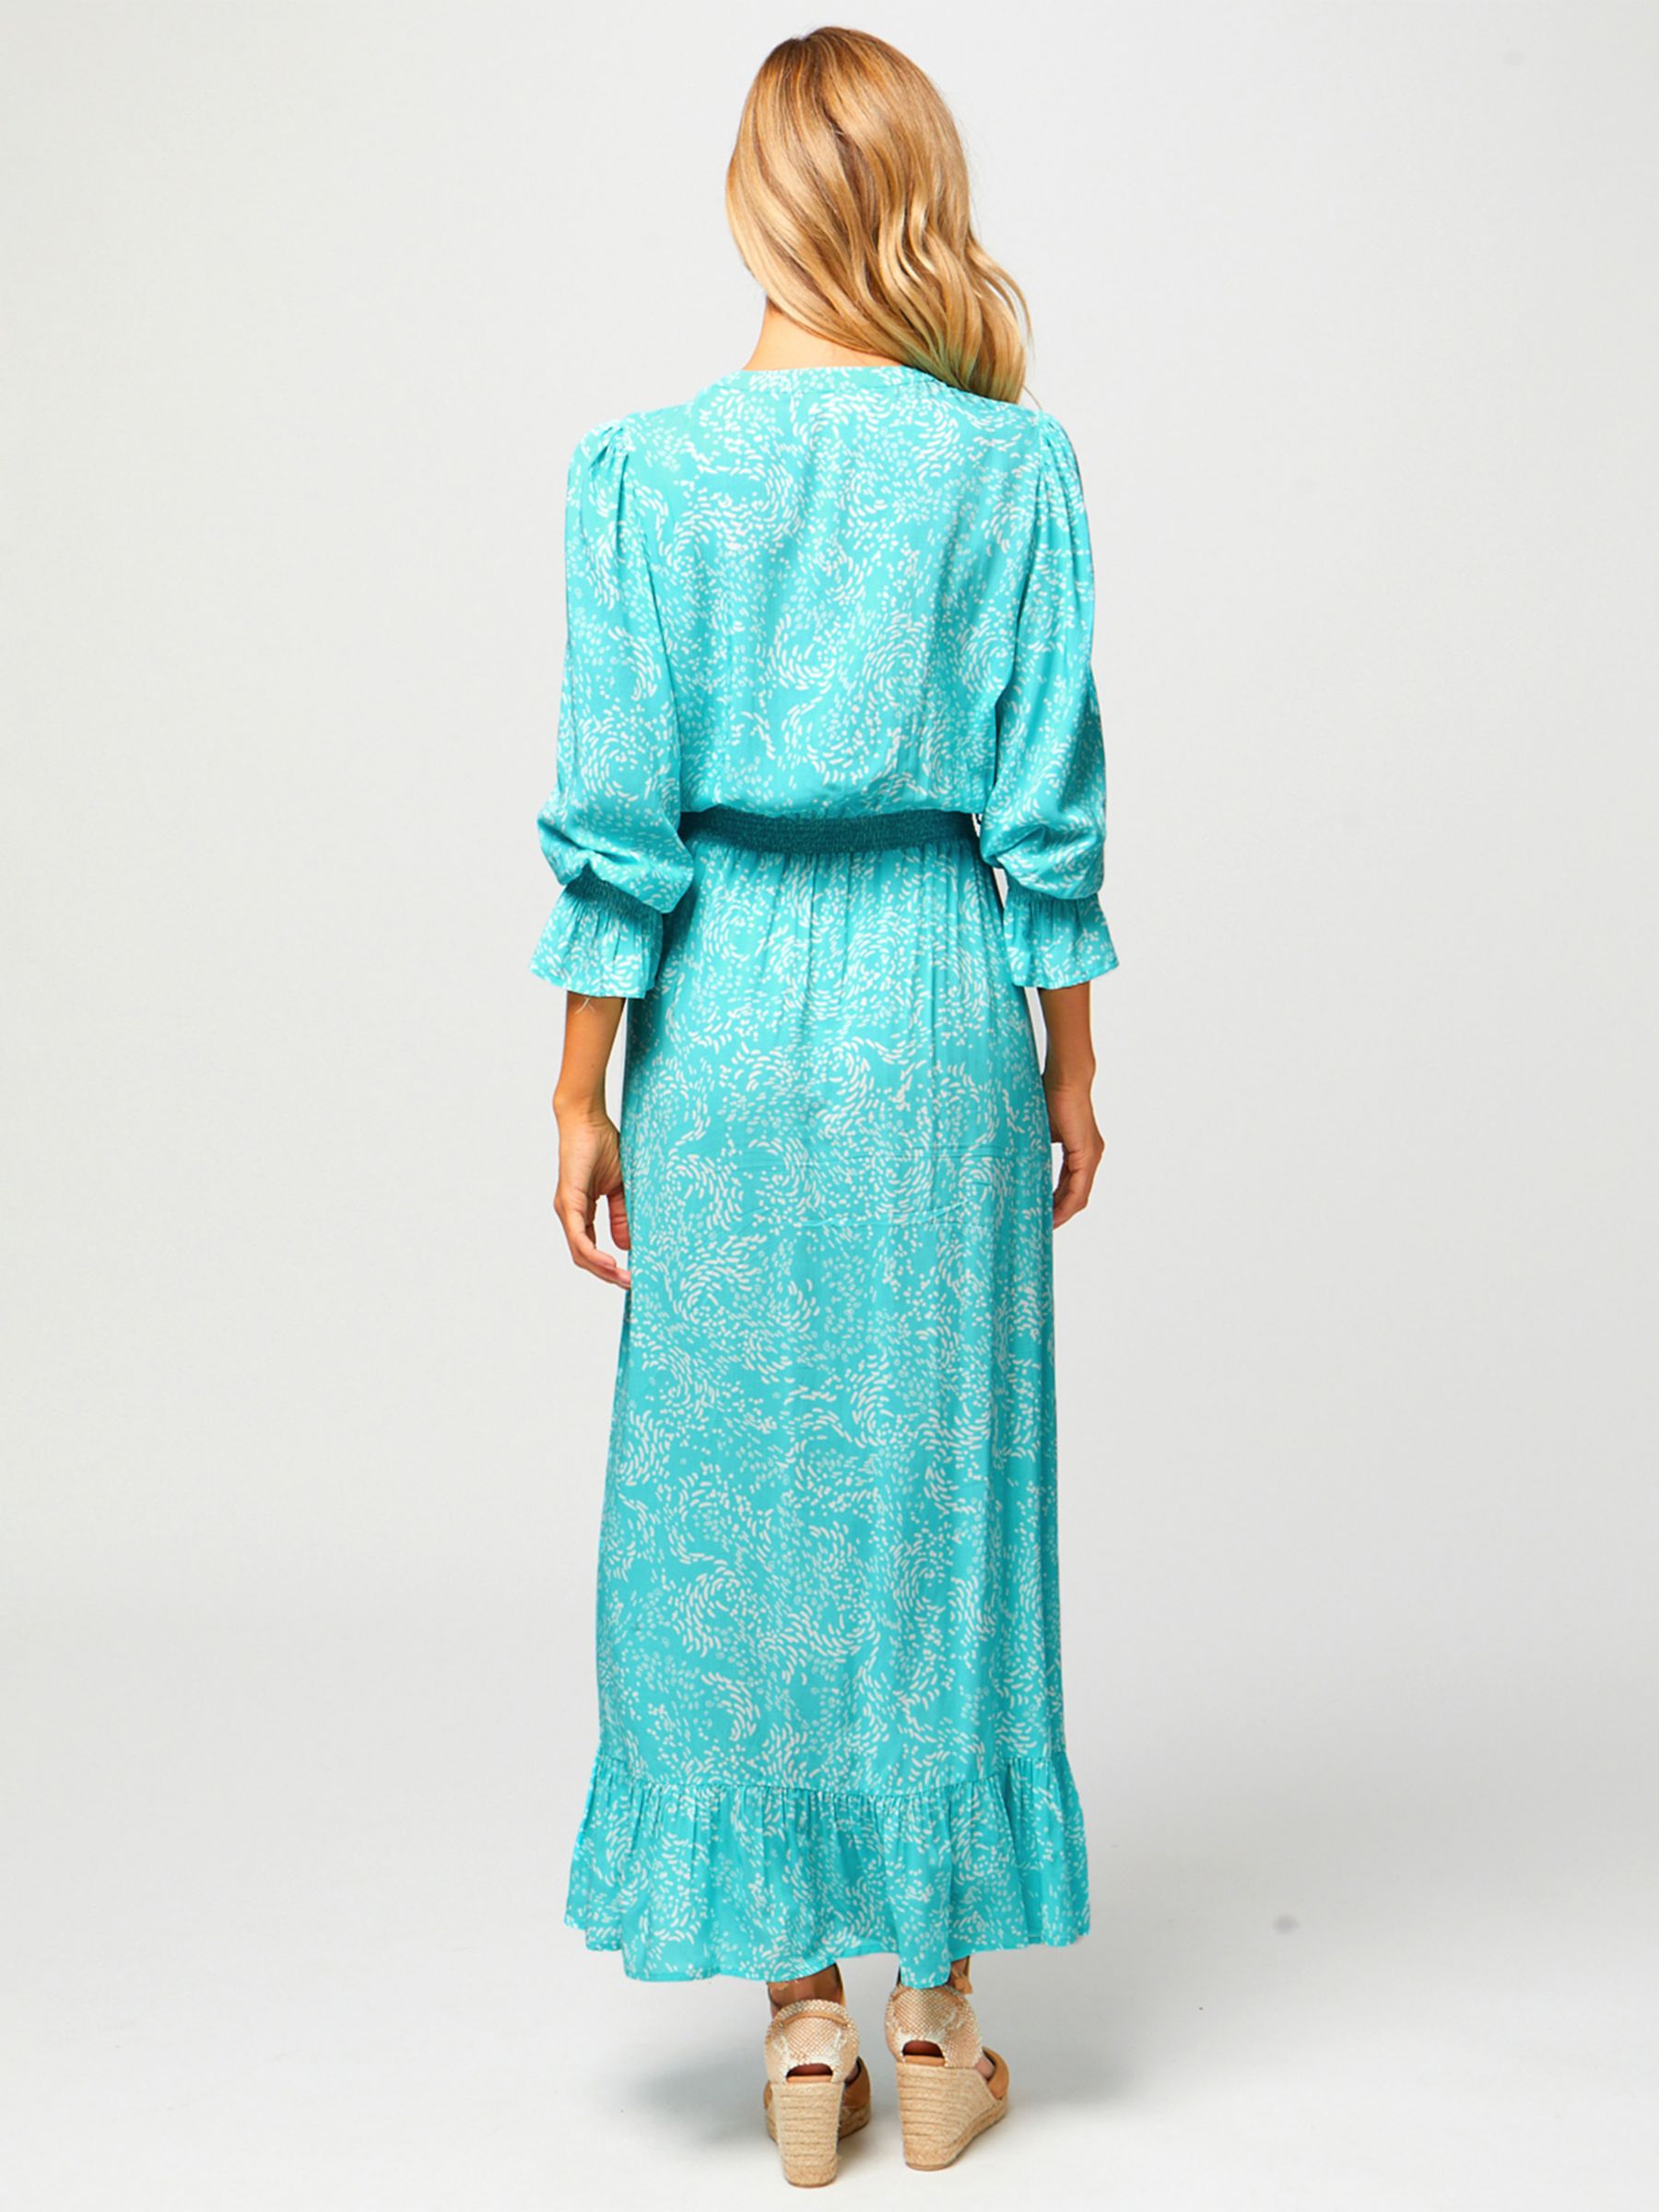 Aspiga Maeve Tiered Hem Maxi Dress, Turquoise/White, XL